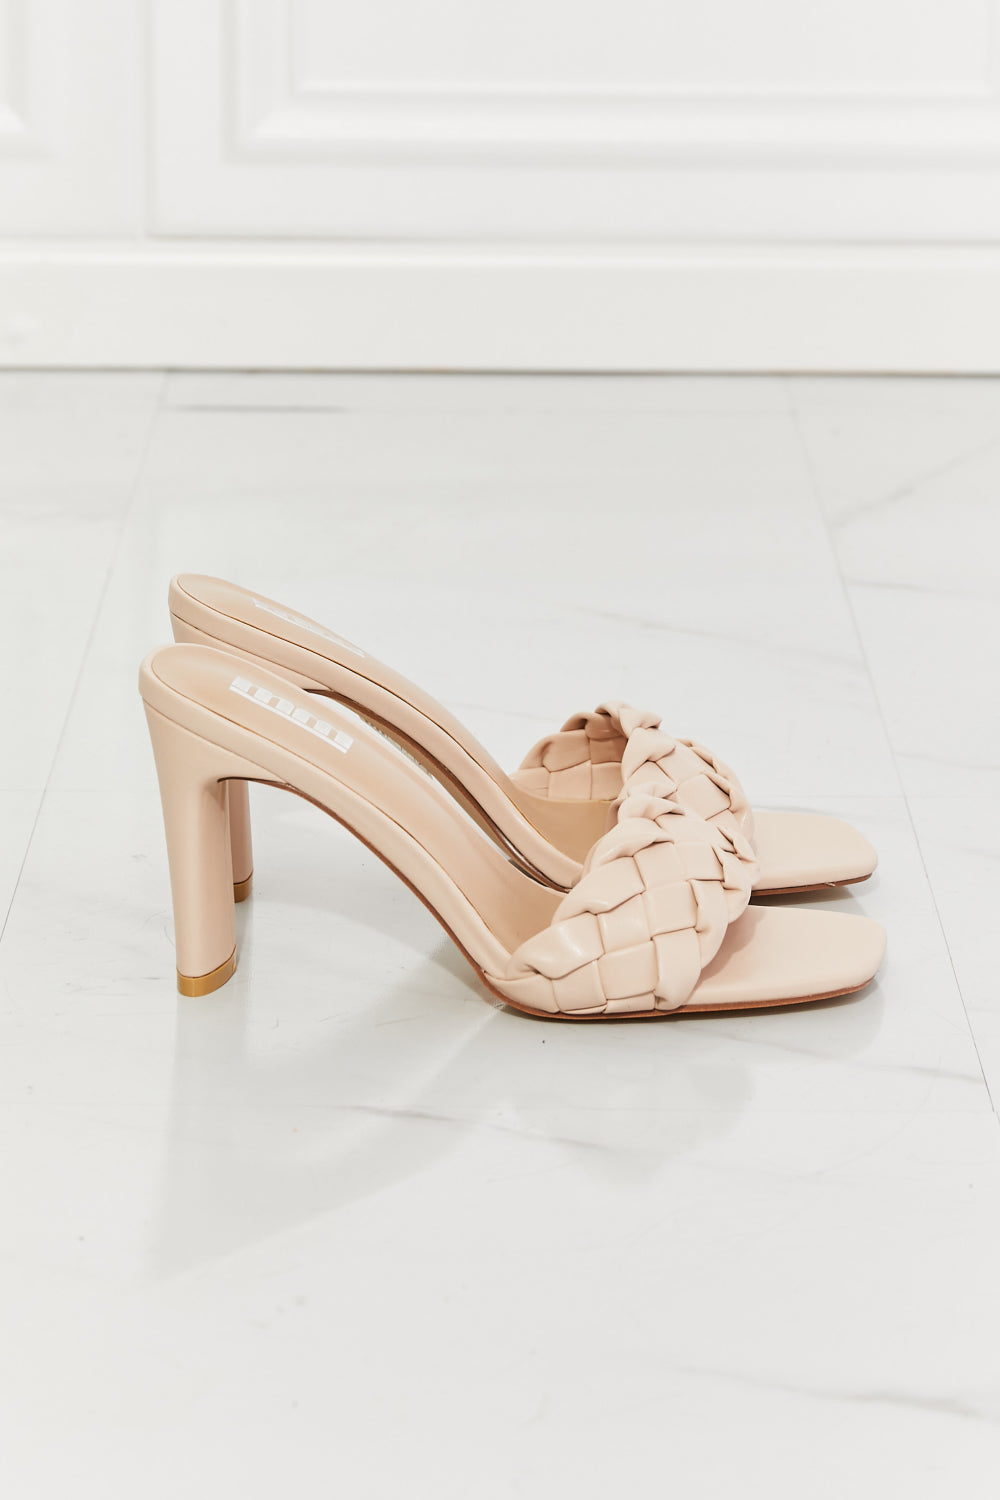 Top of the World Braided Block Heel Sandals in Beige - Copper + Rose